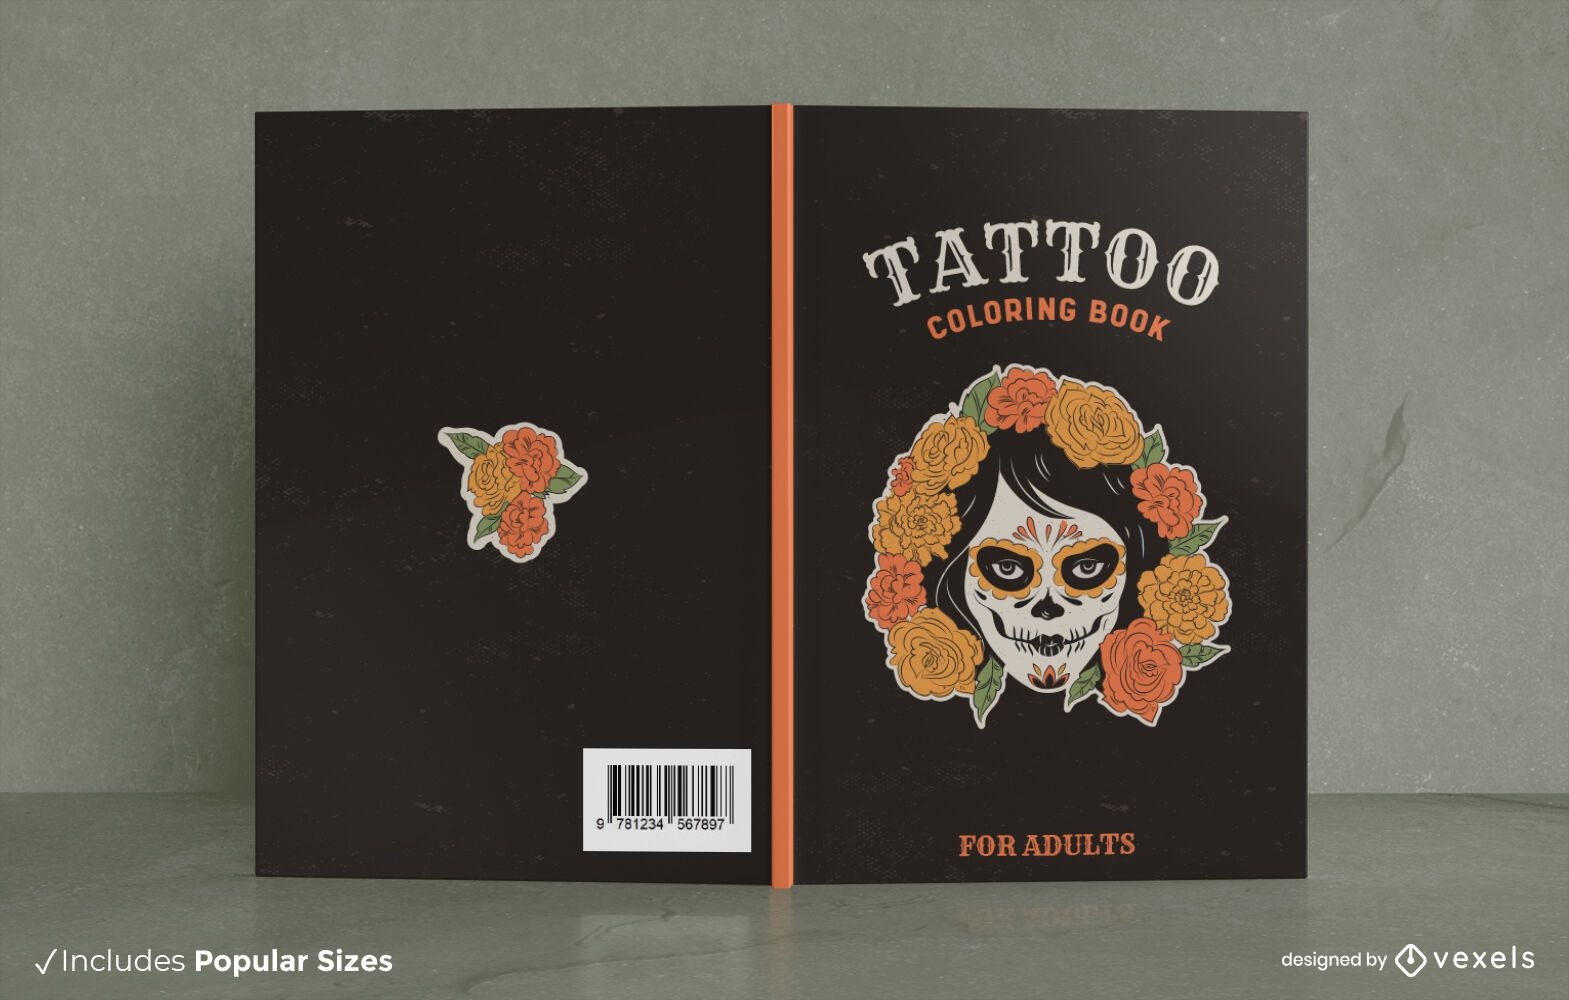 Tattoo coloring book cover design